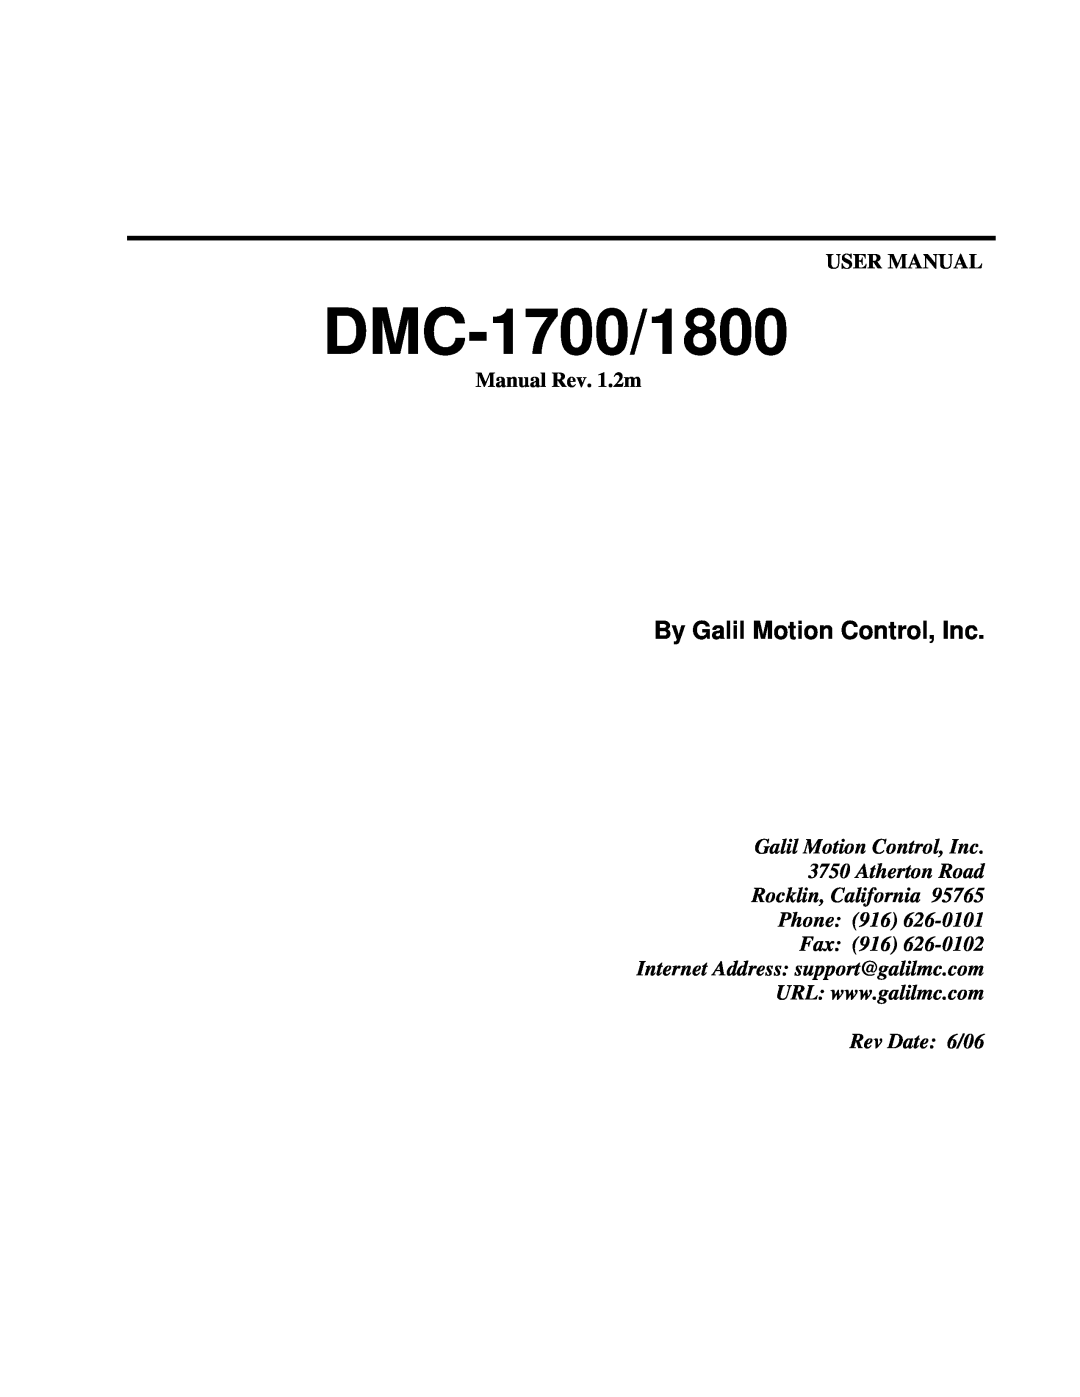 Galil DMC-1800 user manual DMC-1700/1800, By Galil Motion Control, Inc, User Manual, Manual Rev. 1.2m, Rev Date 6/06 